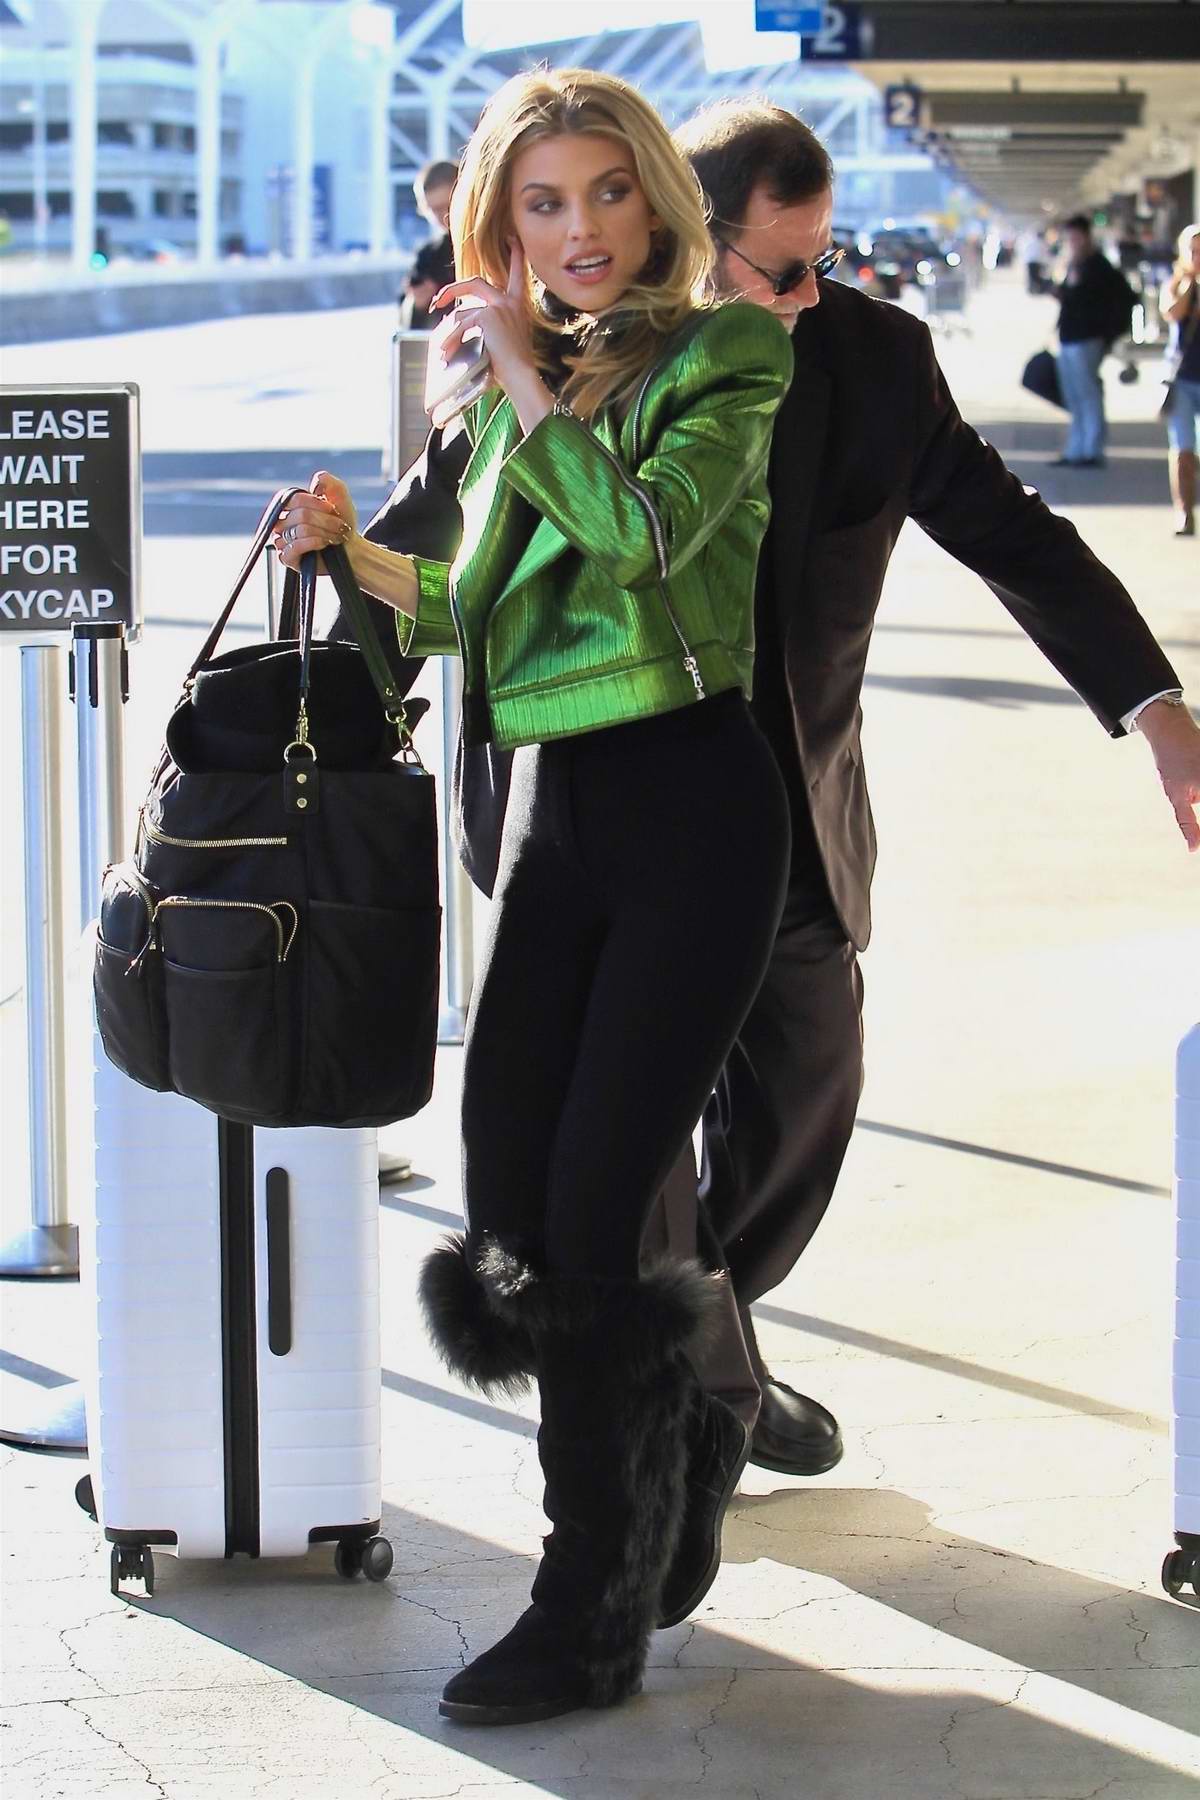 Jennifer Lopez rocks a pair of colorful leggings as she hits the